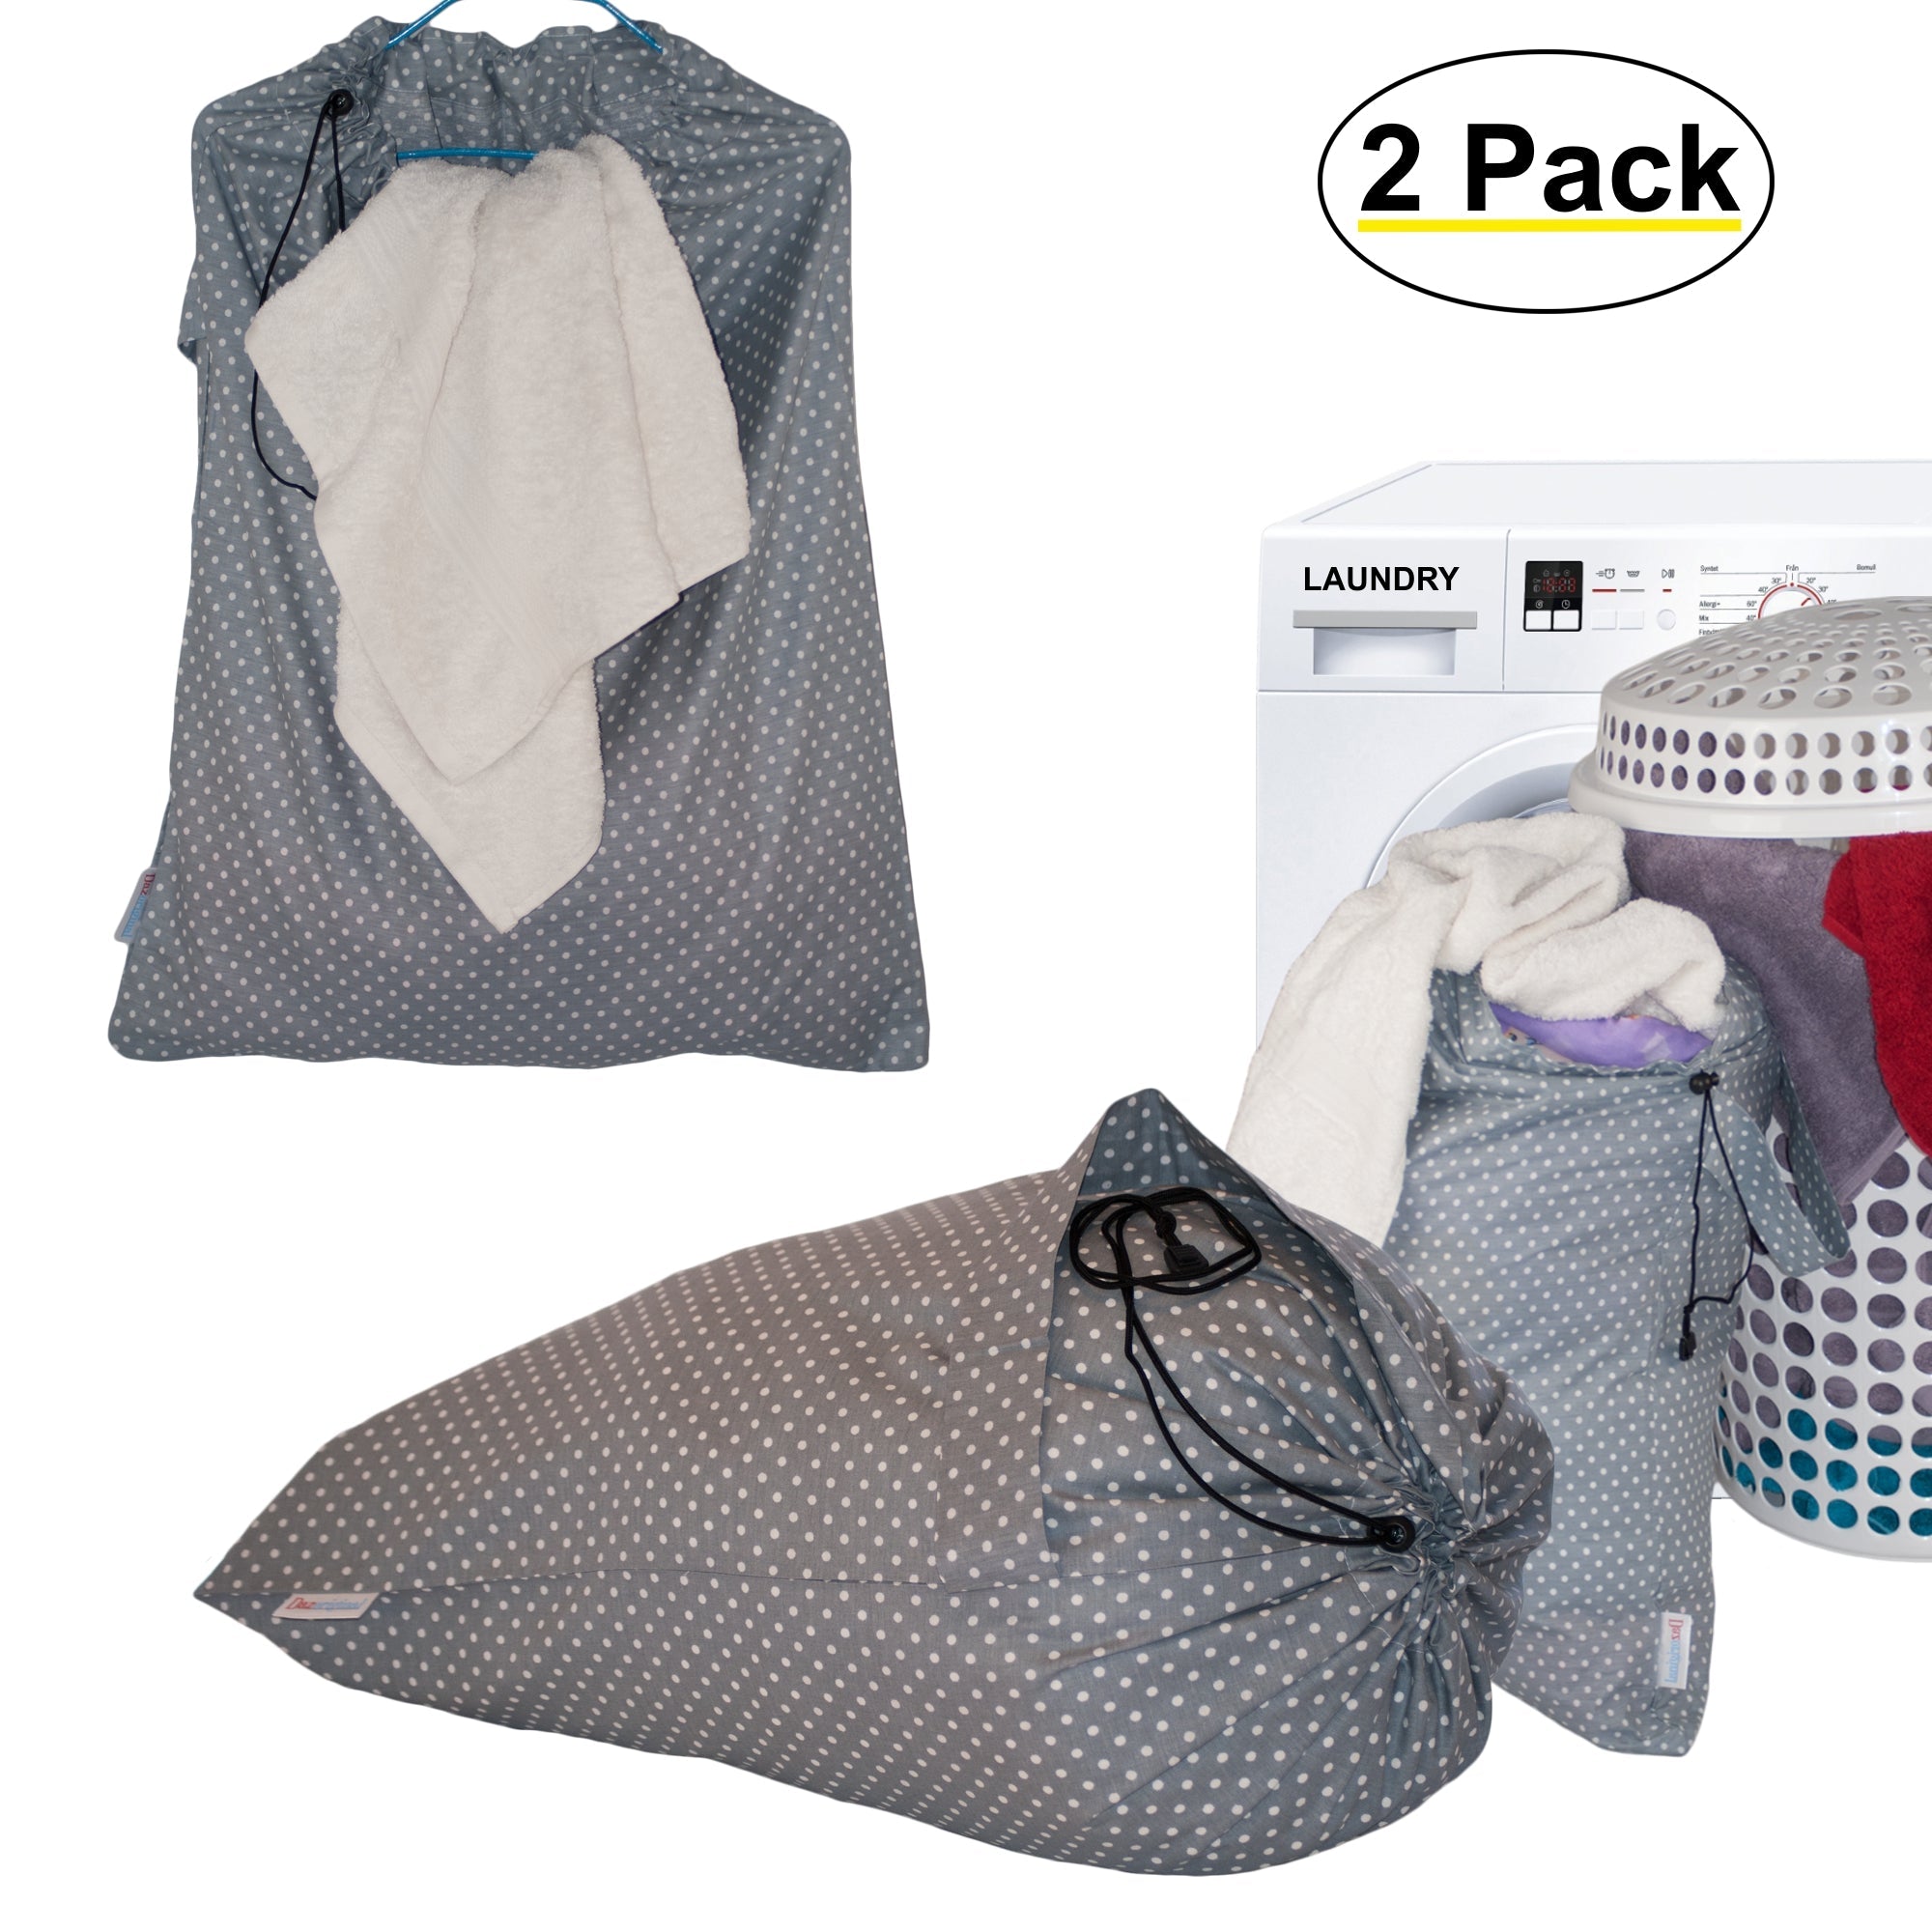 Laundry Bags & Storage - Dazoriginal